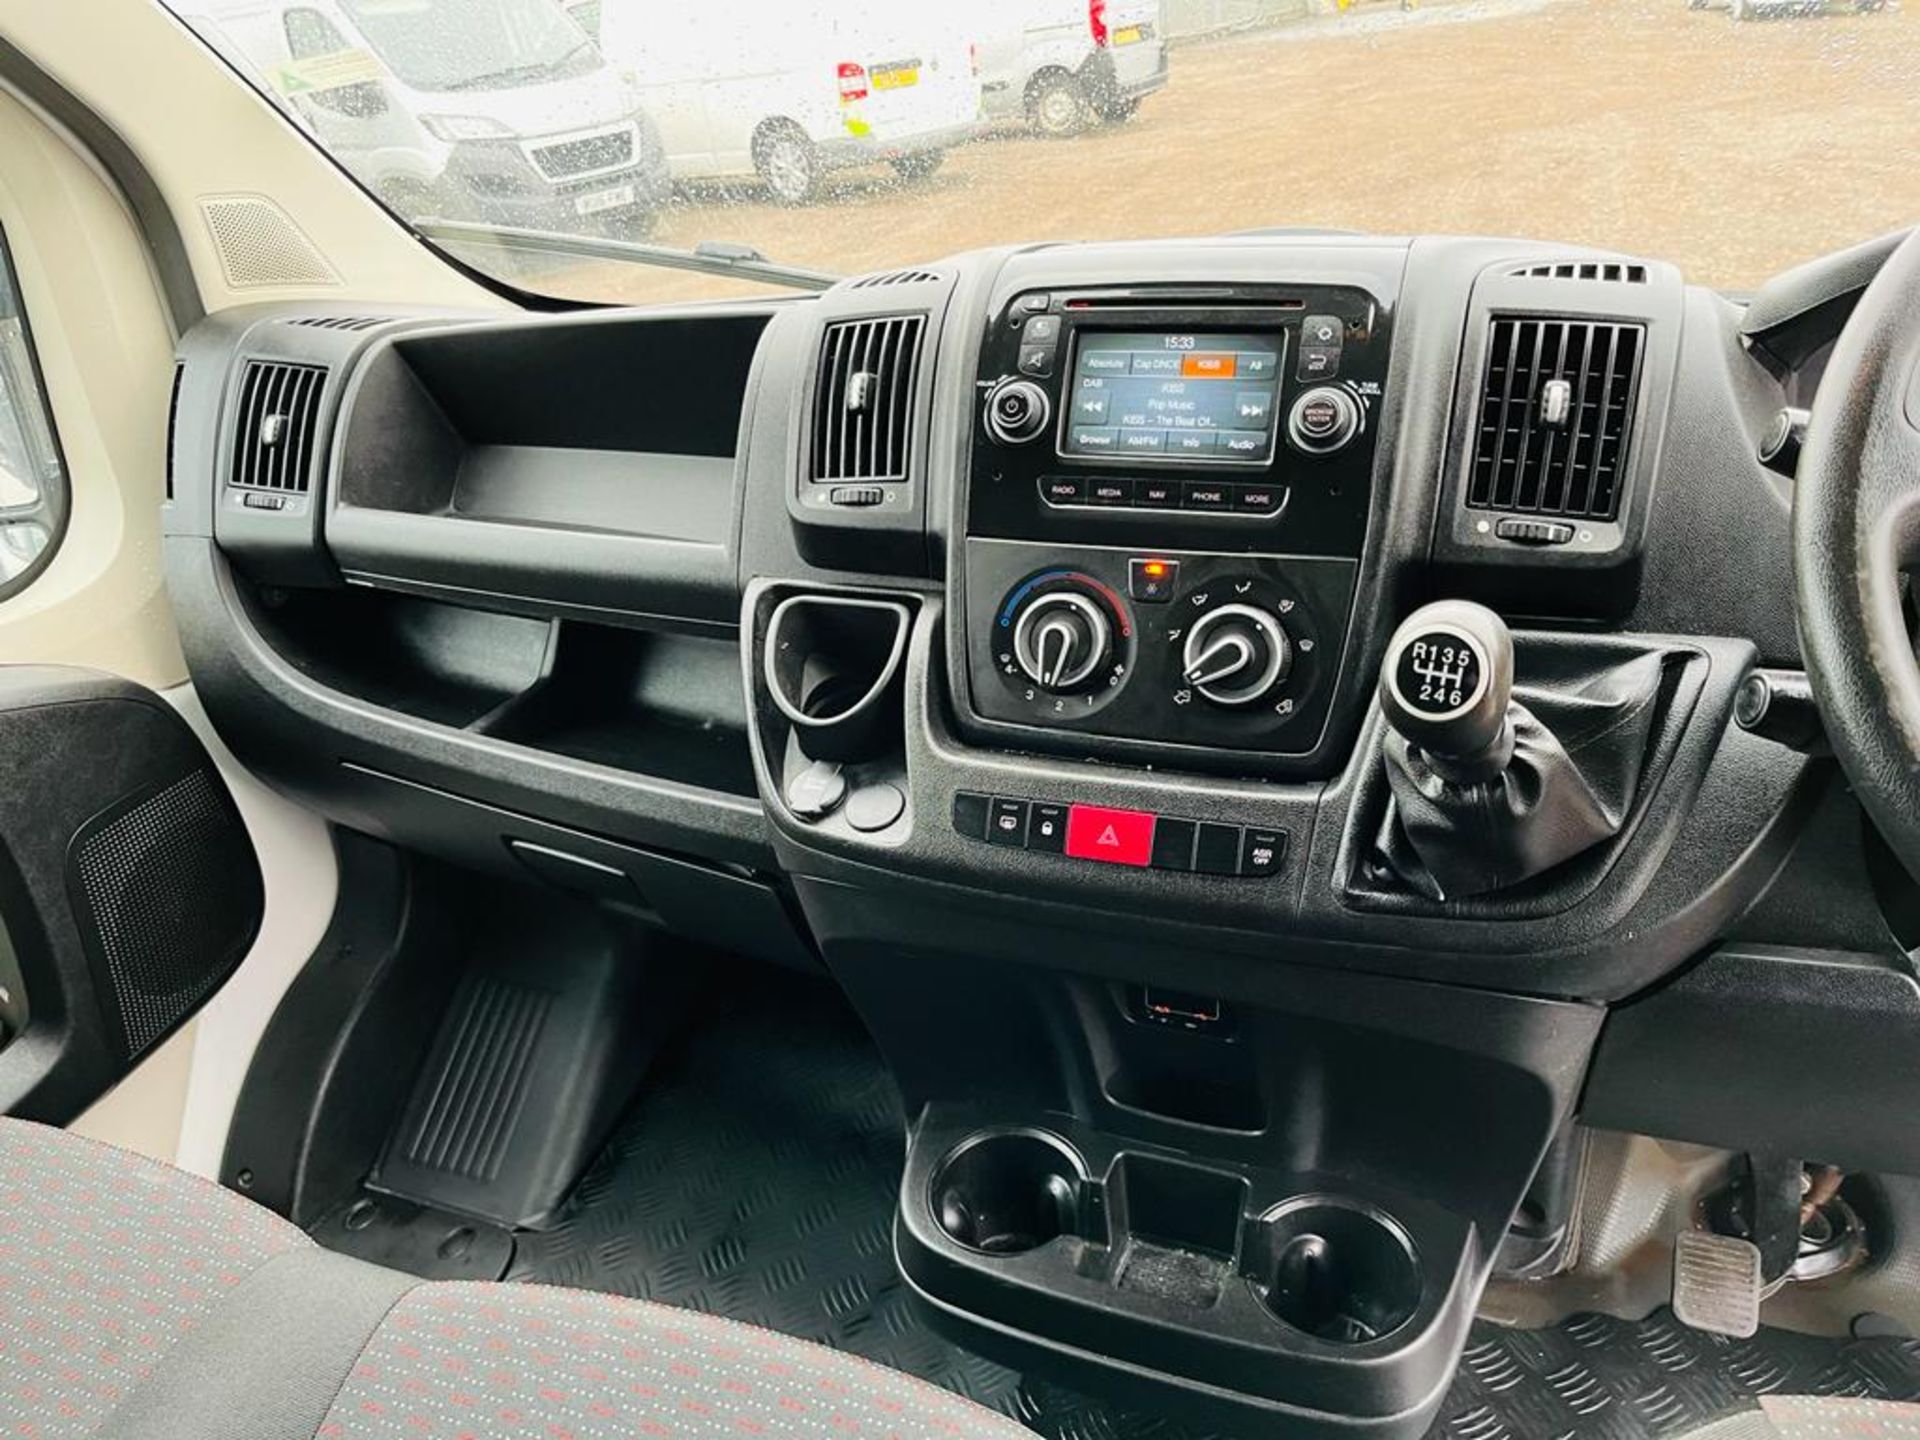 Peugeot Boxer 335 BlueHDI 2.0 130 L3 H2 LWB 2018 '18 Reg' - A/C - Panel Van - Navigation System - Image 19 of 25